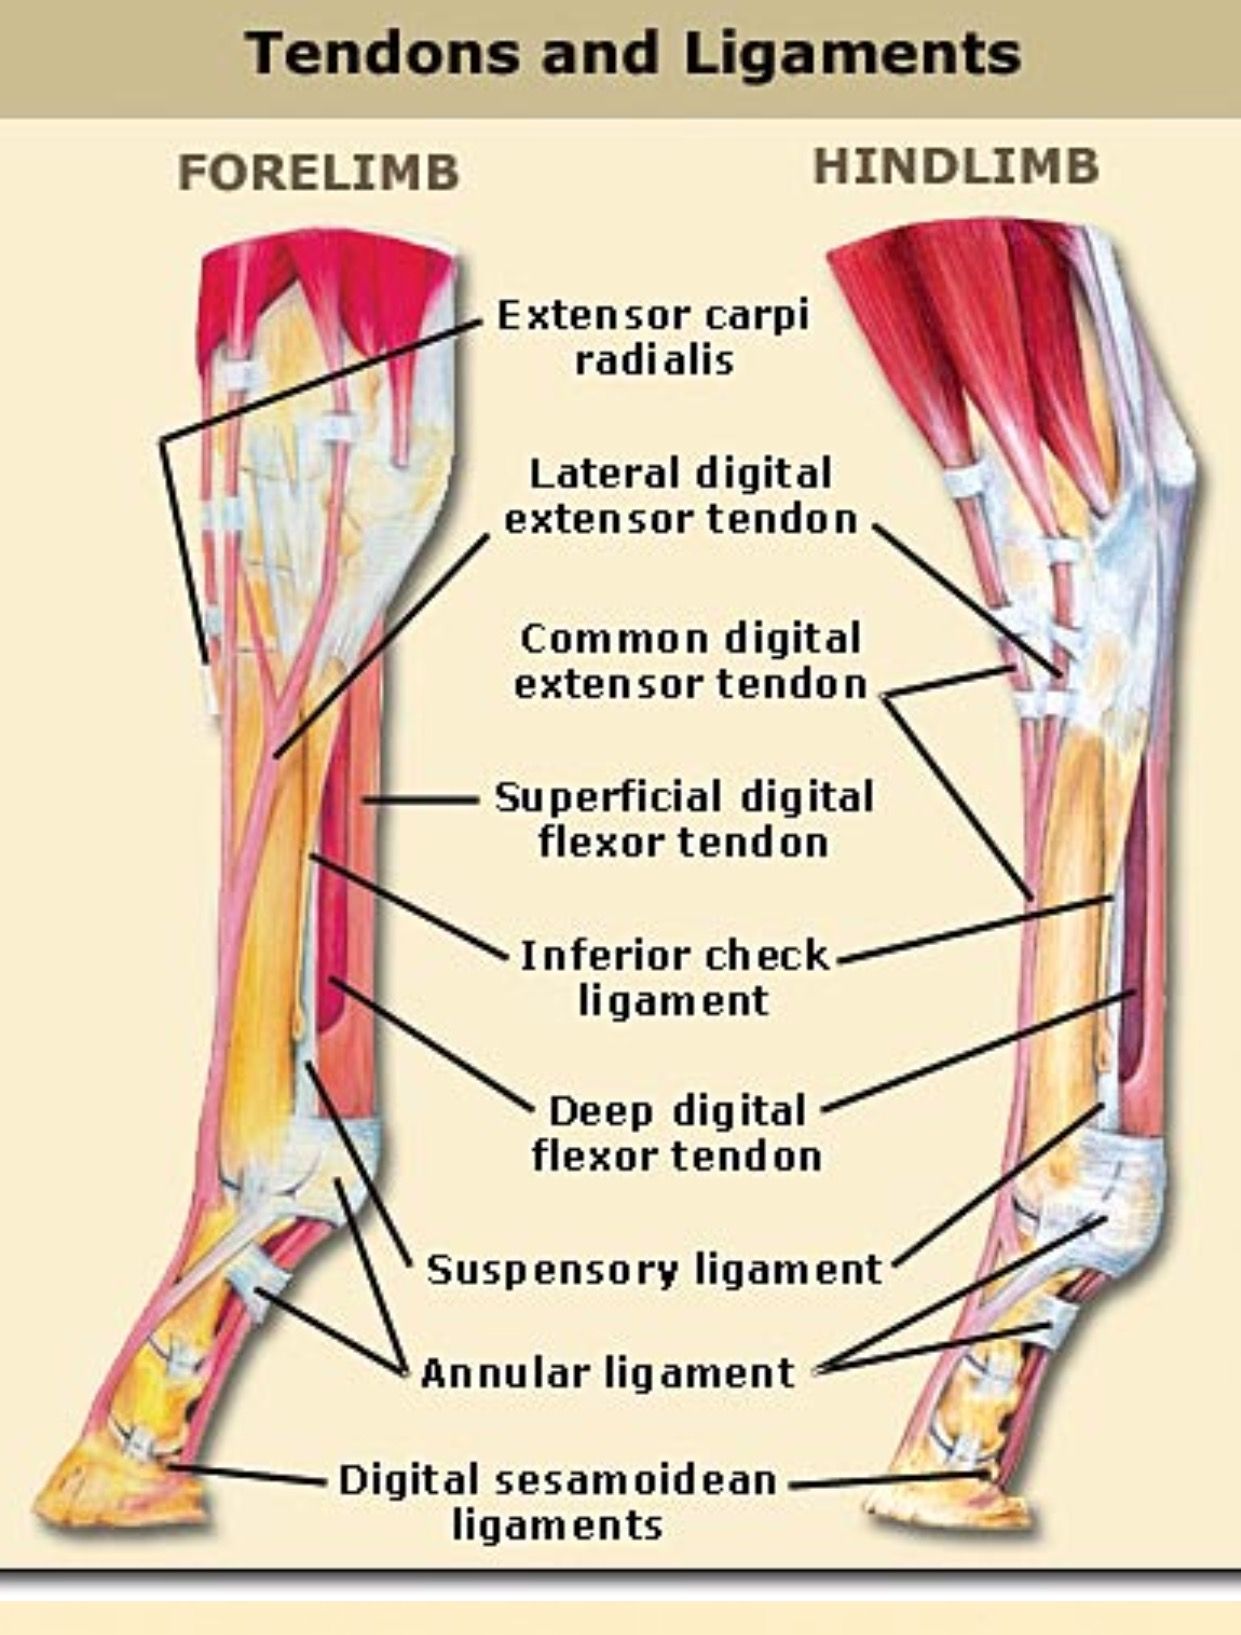 Annular ligament